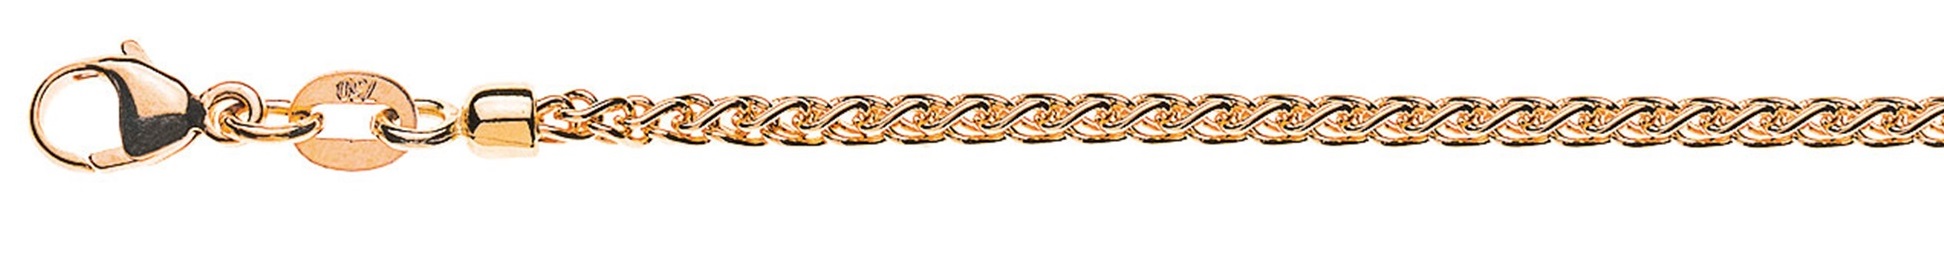 AURONOS Prestige Halskette Roségold 18K Zopfkette 40cm 2.15mm